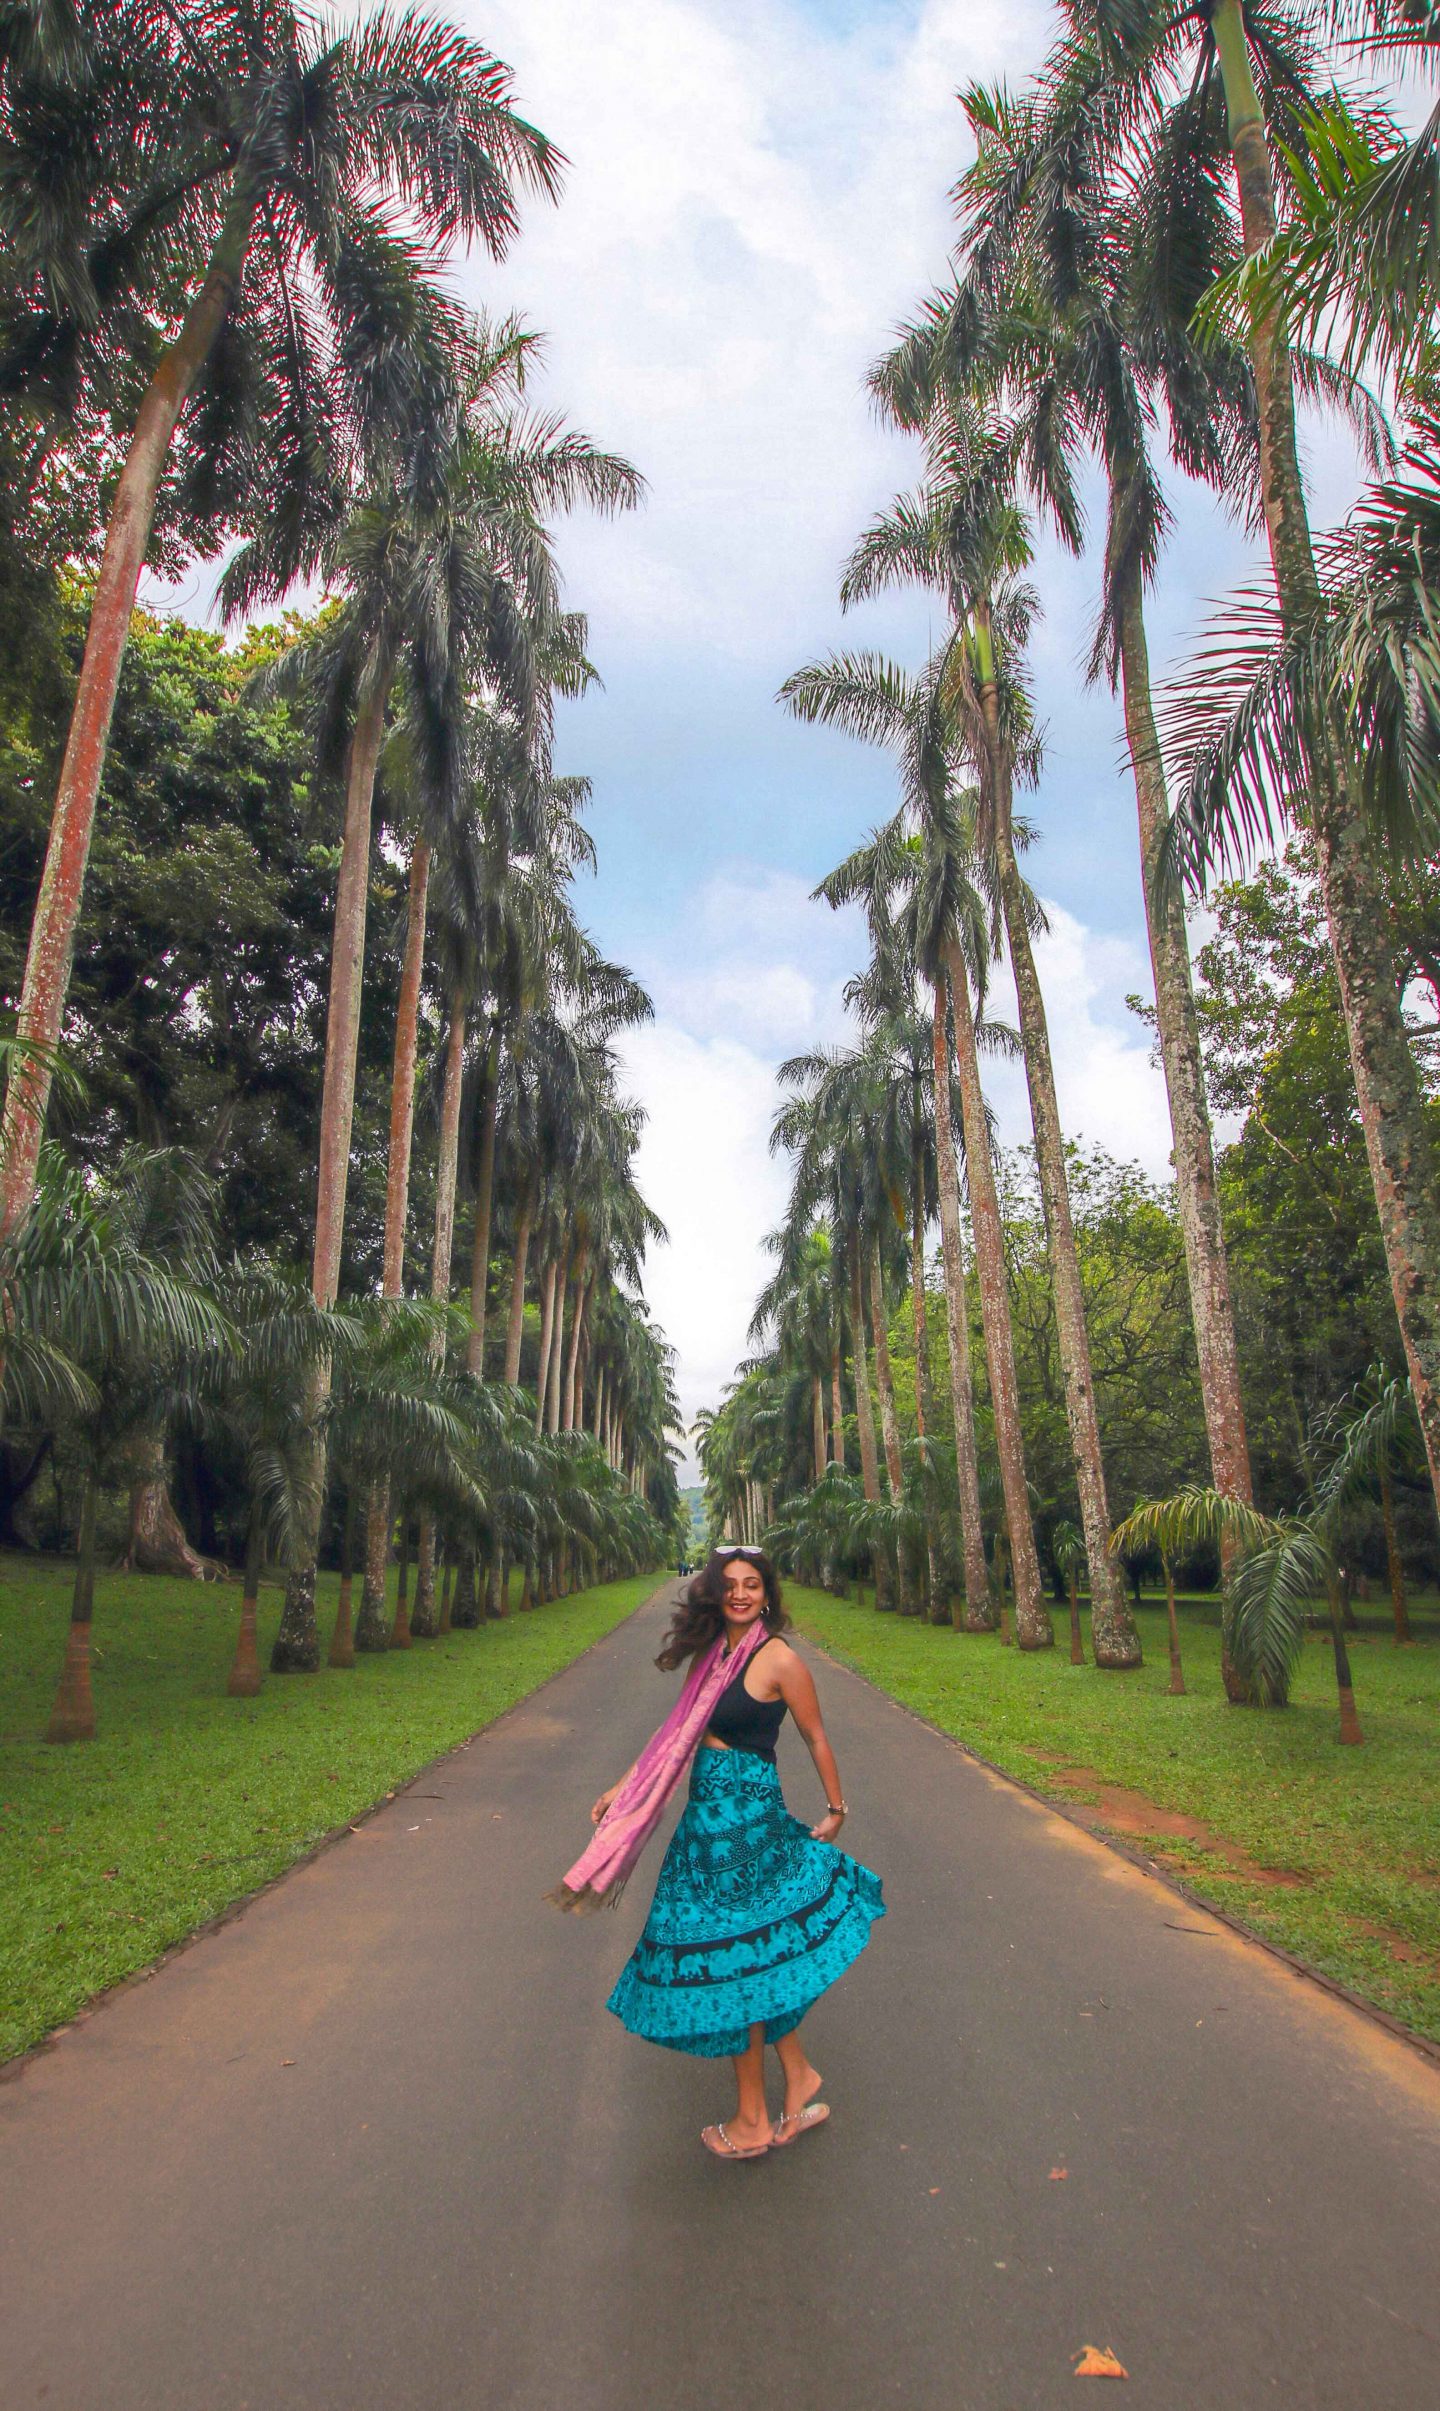 At The Royal Botanical Garden Kandy